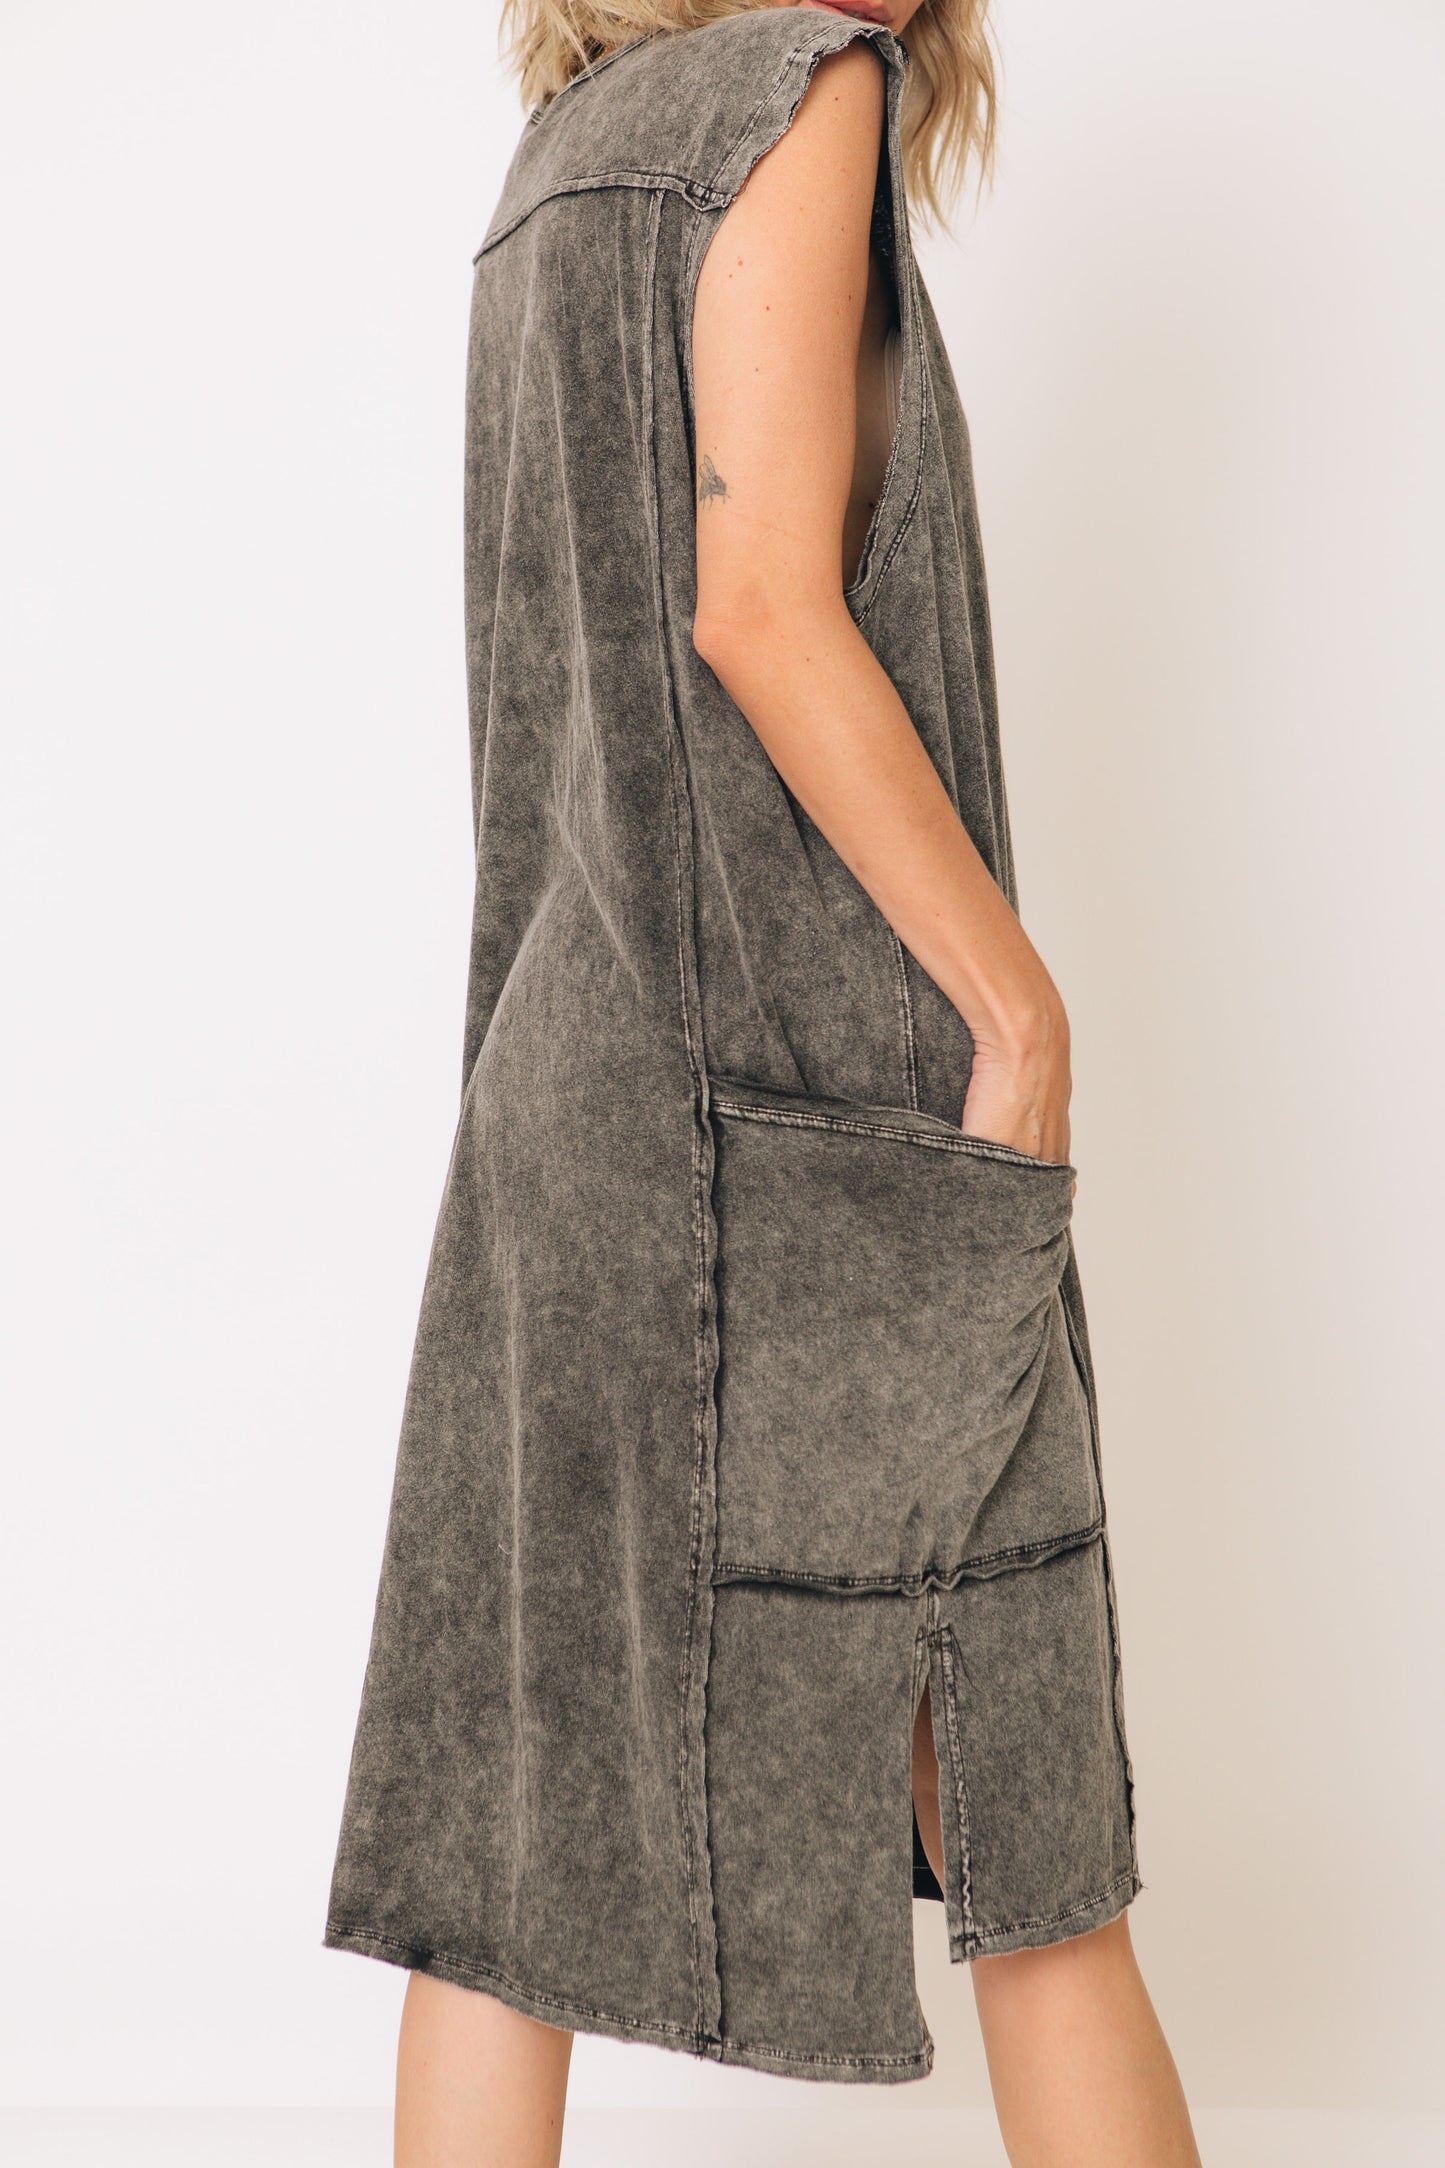 Mineral Washed Sleeveless Side Pocket Dress (S-L)